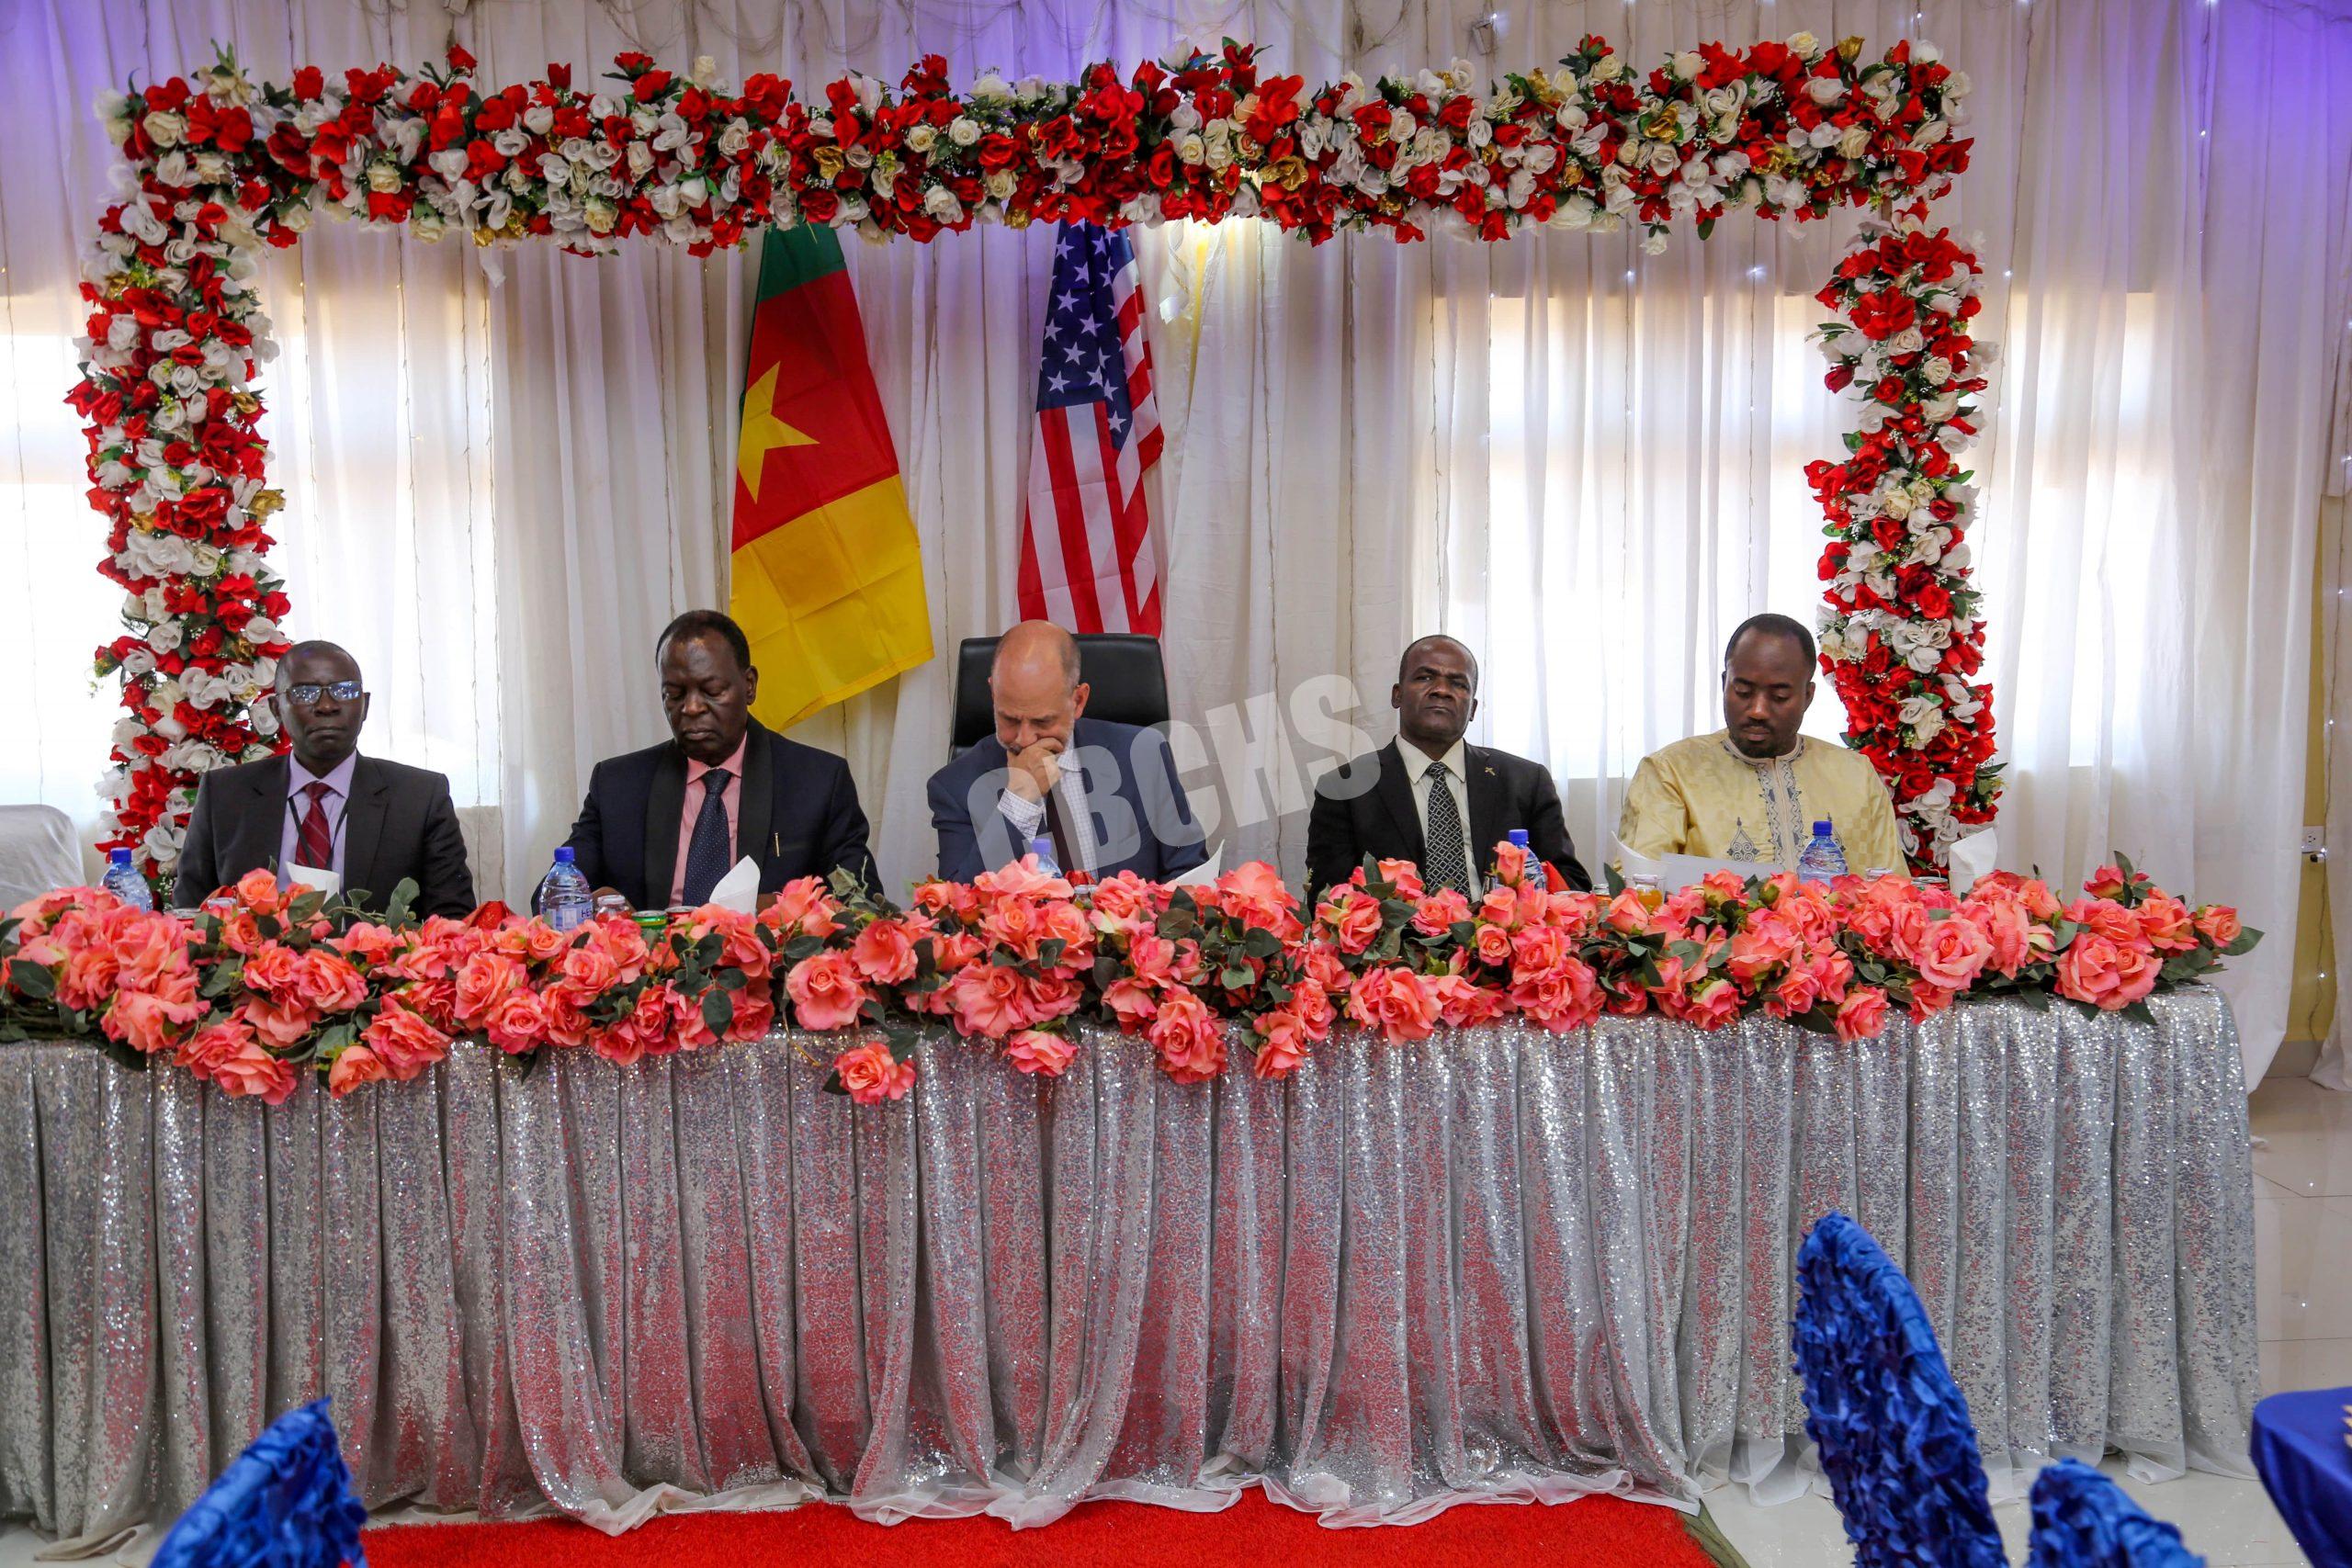 “CBC Chose Us” – U.S Ambassador to Cameroon